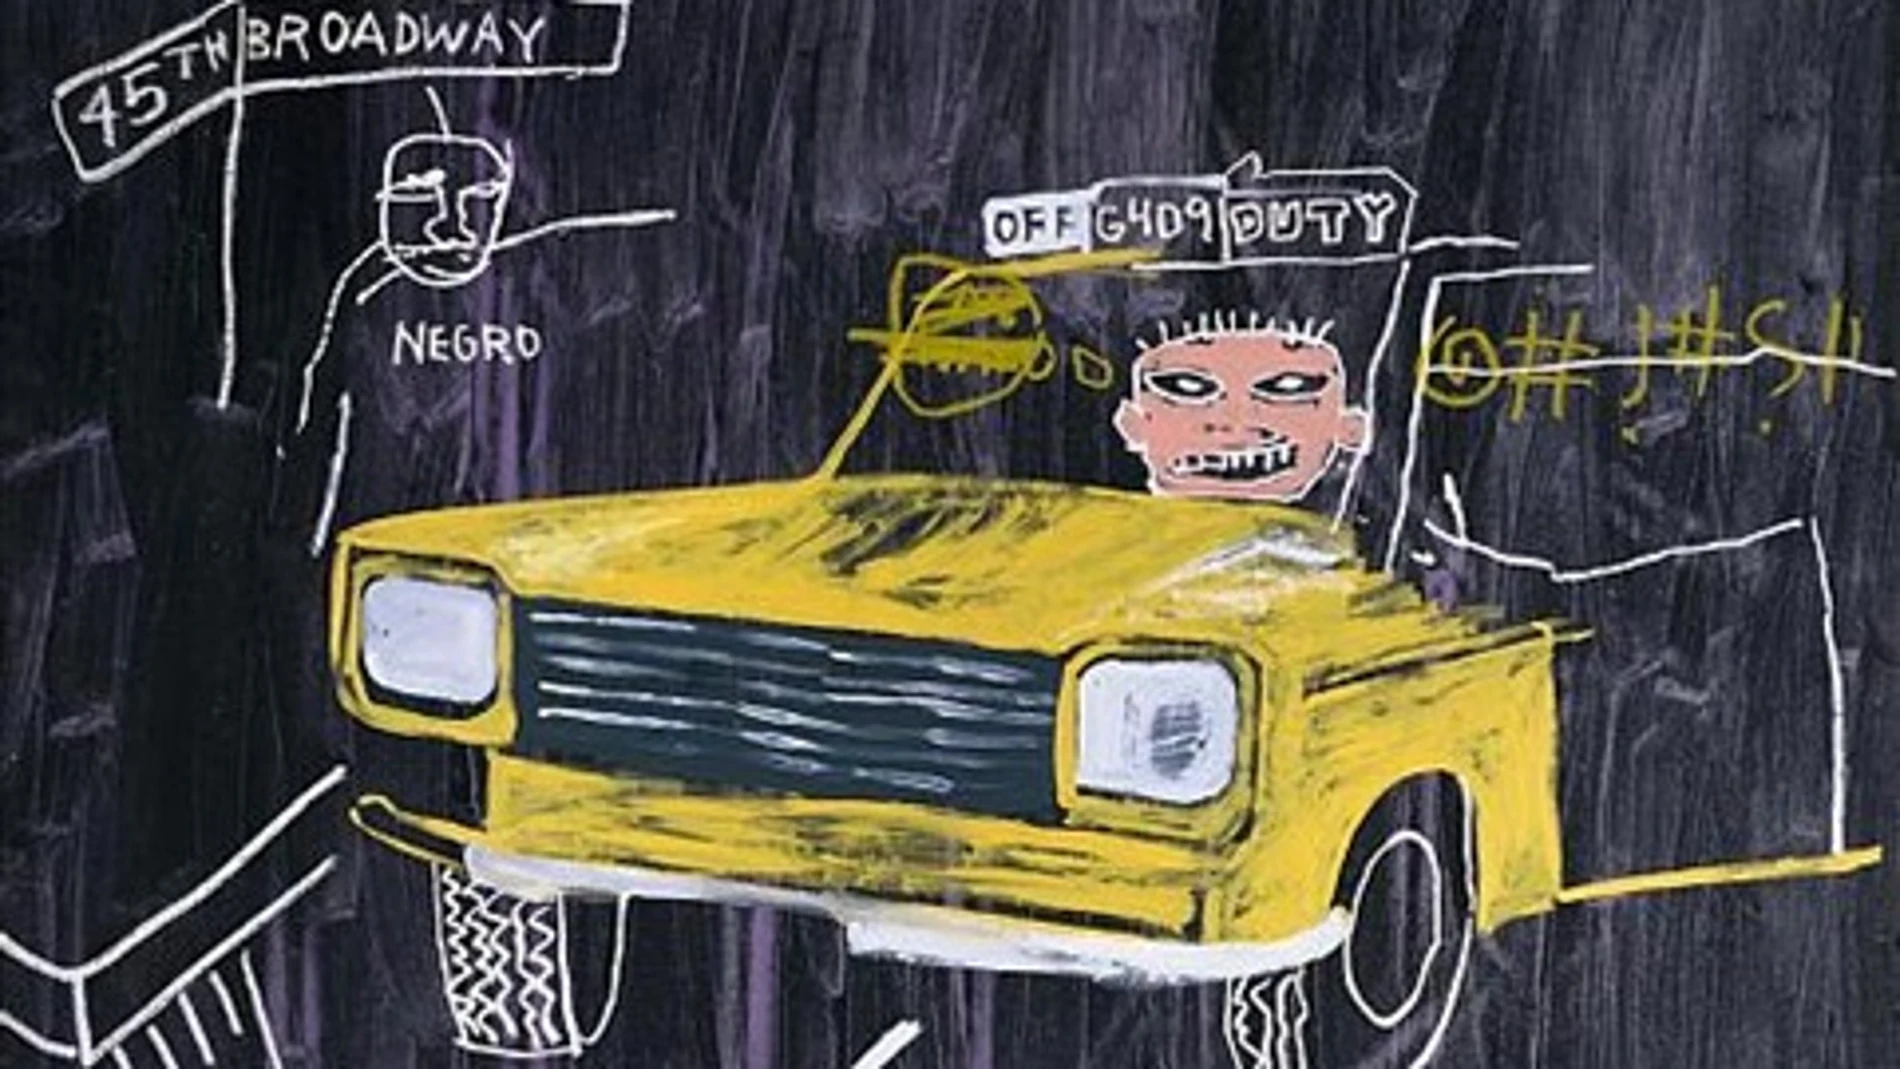  'Taxi, 45th/ BRoadway'